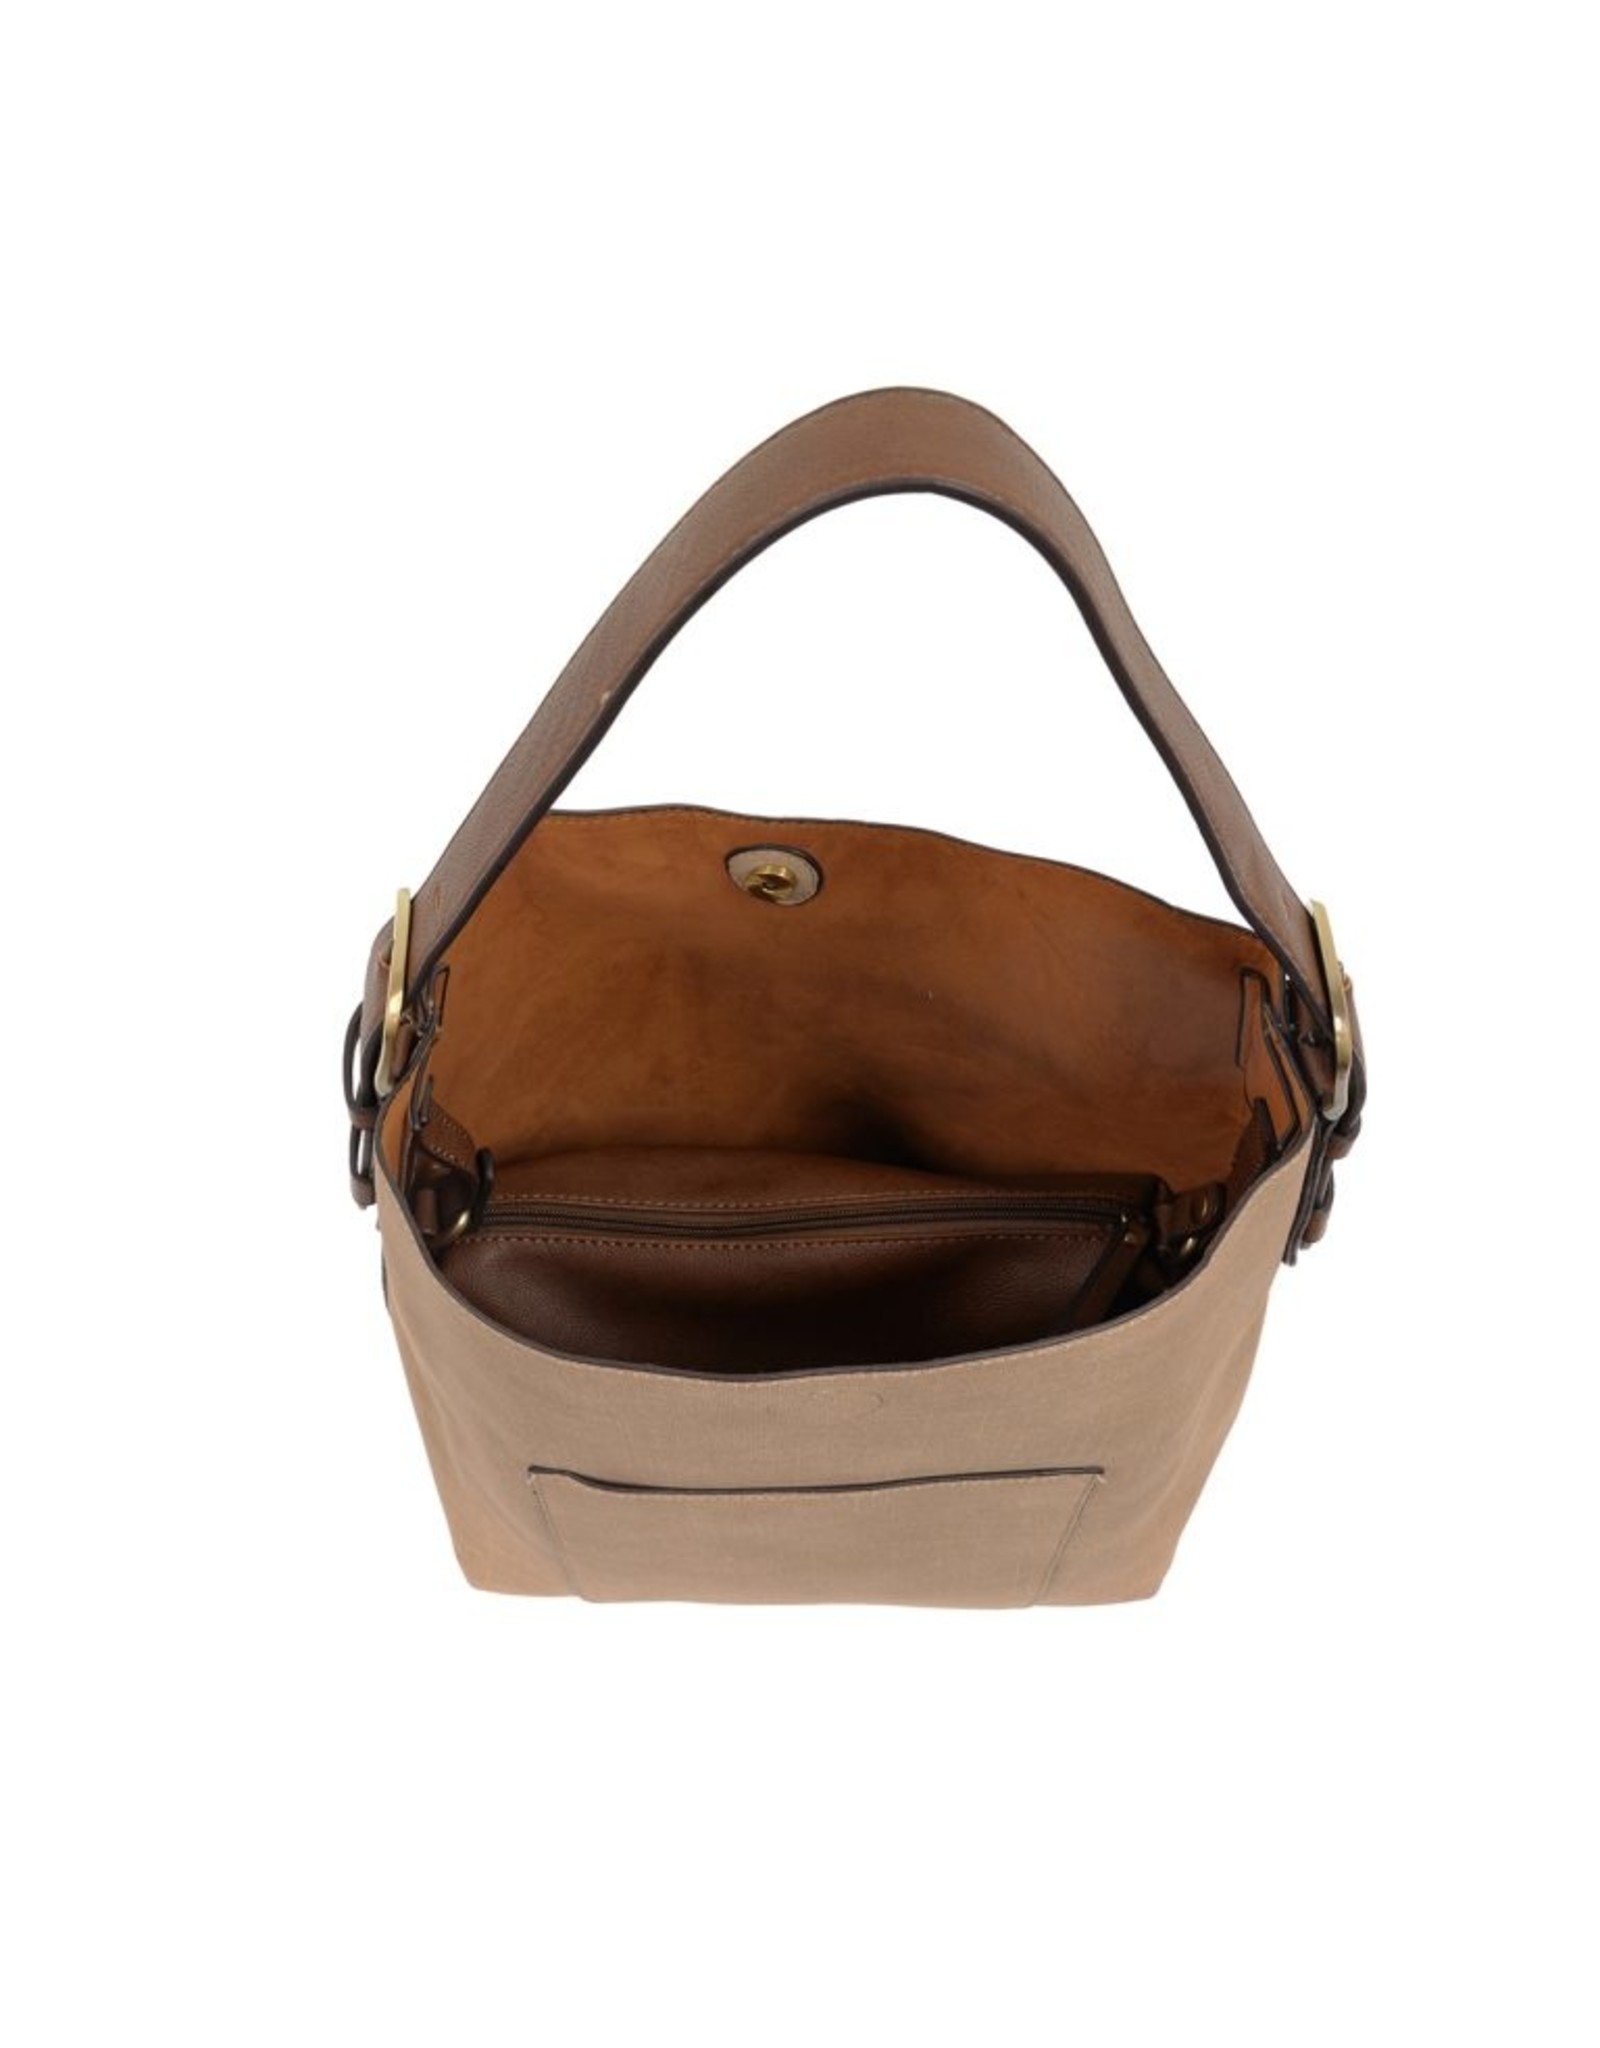 Joy Susan Hobo Handle Handbag-Taupe Linen/Coffee